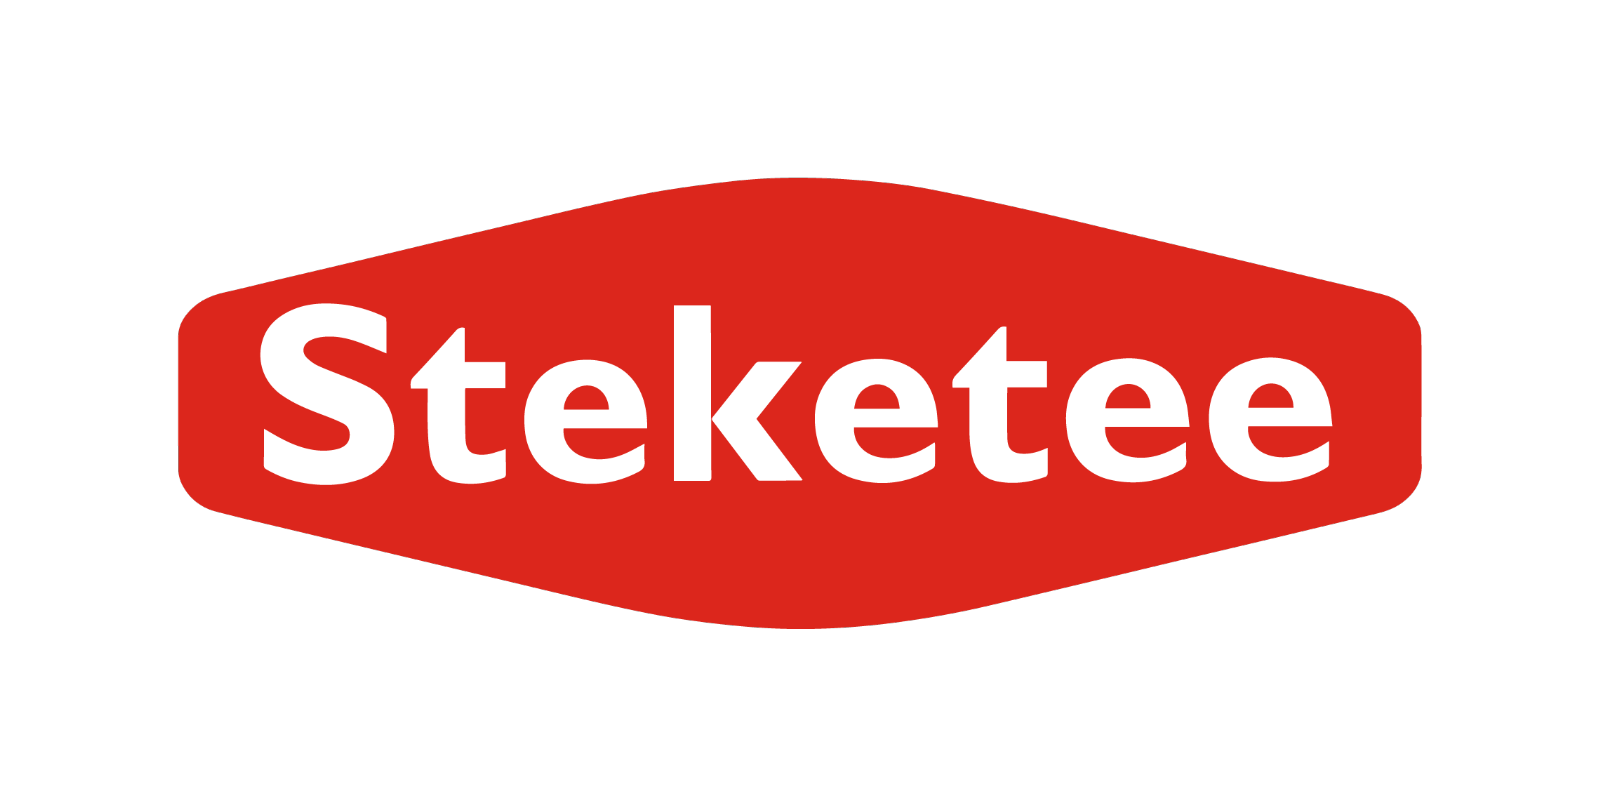 Steketee logo